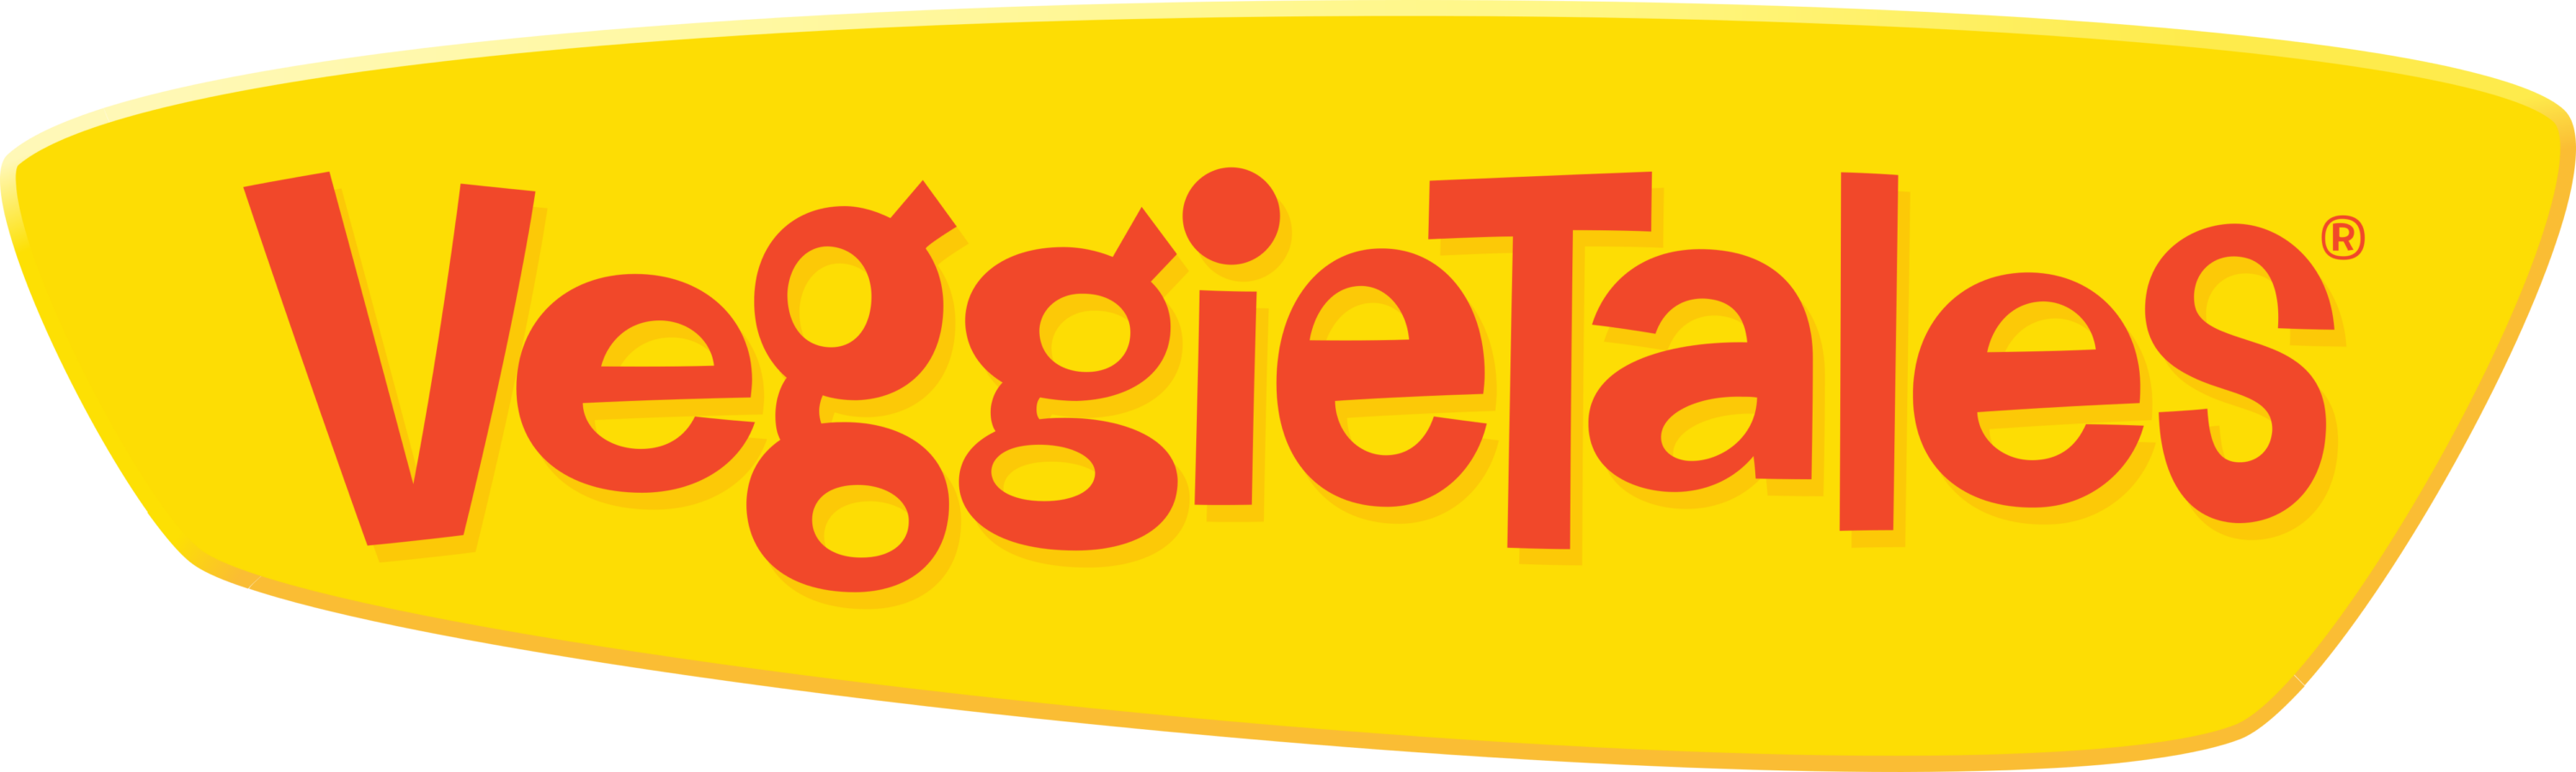 Veggie Tales Logo